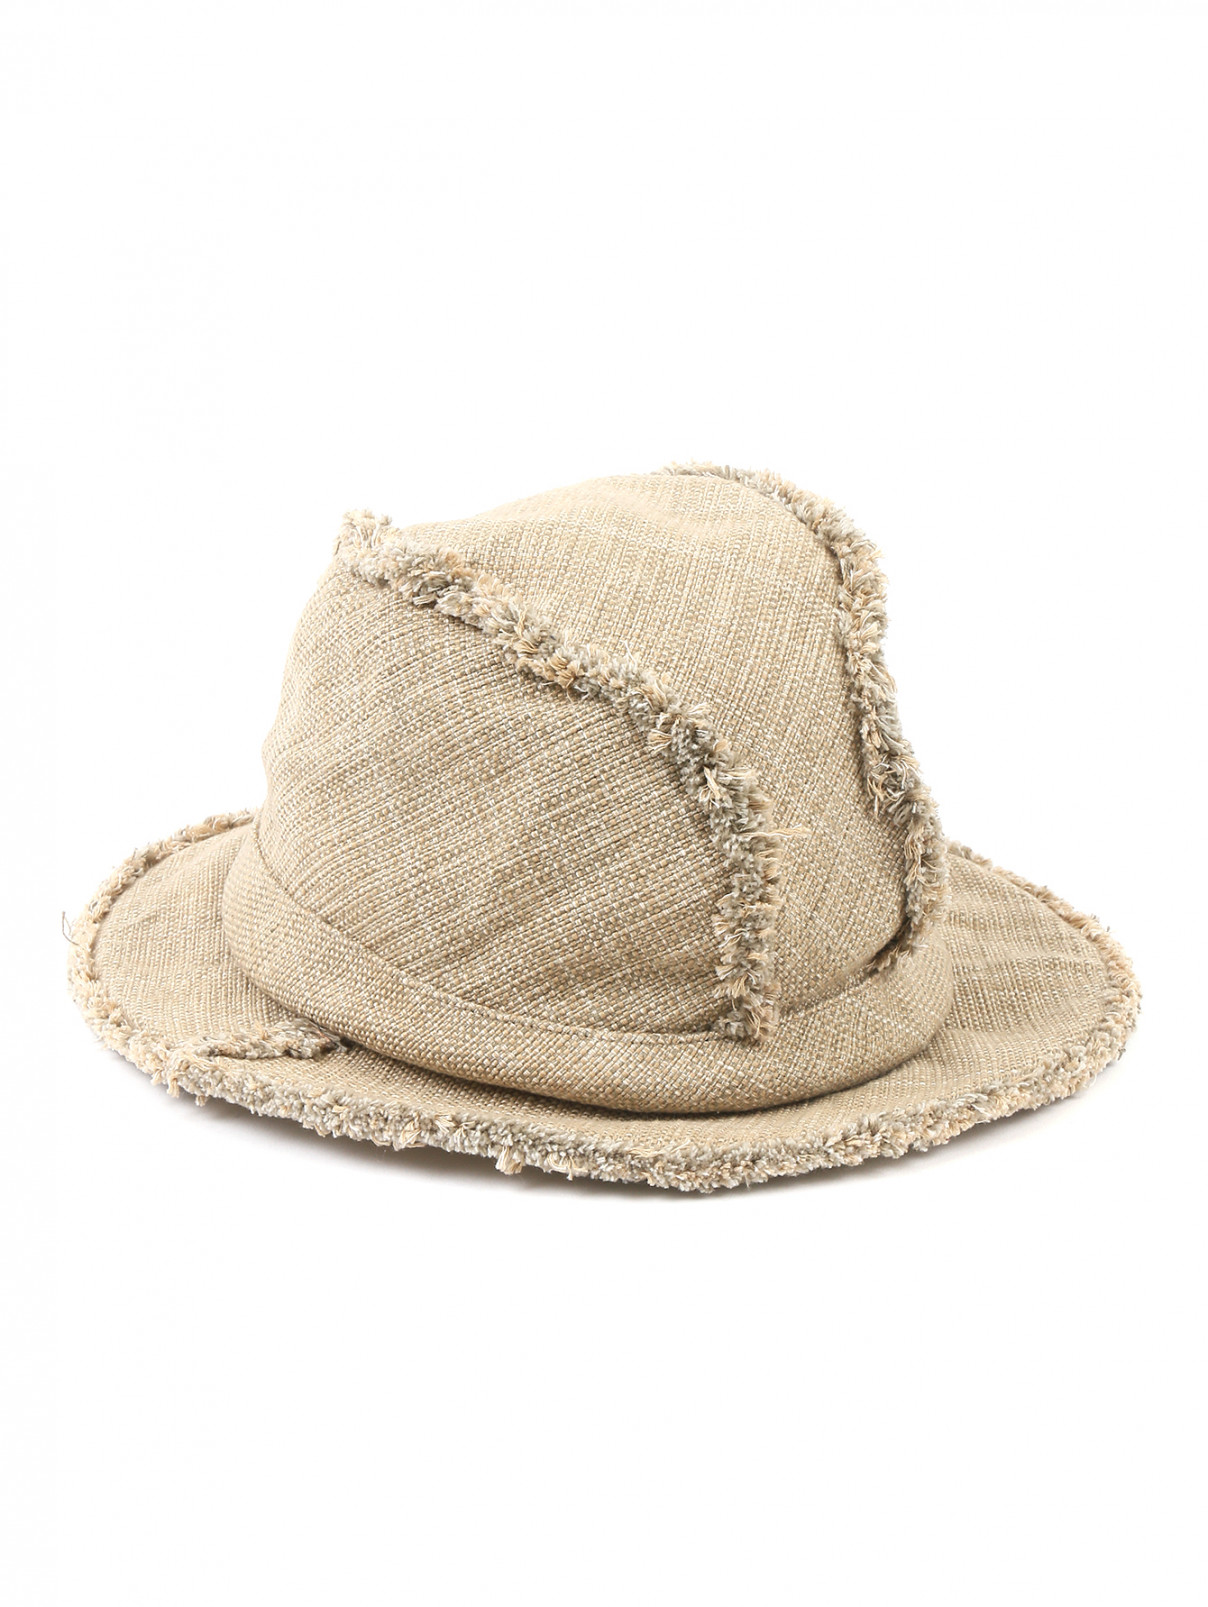 Шляпа из хлопка с бахромой Stephen Jones Millinery  –  Общий вид  – Цвет:  Бежевый